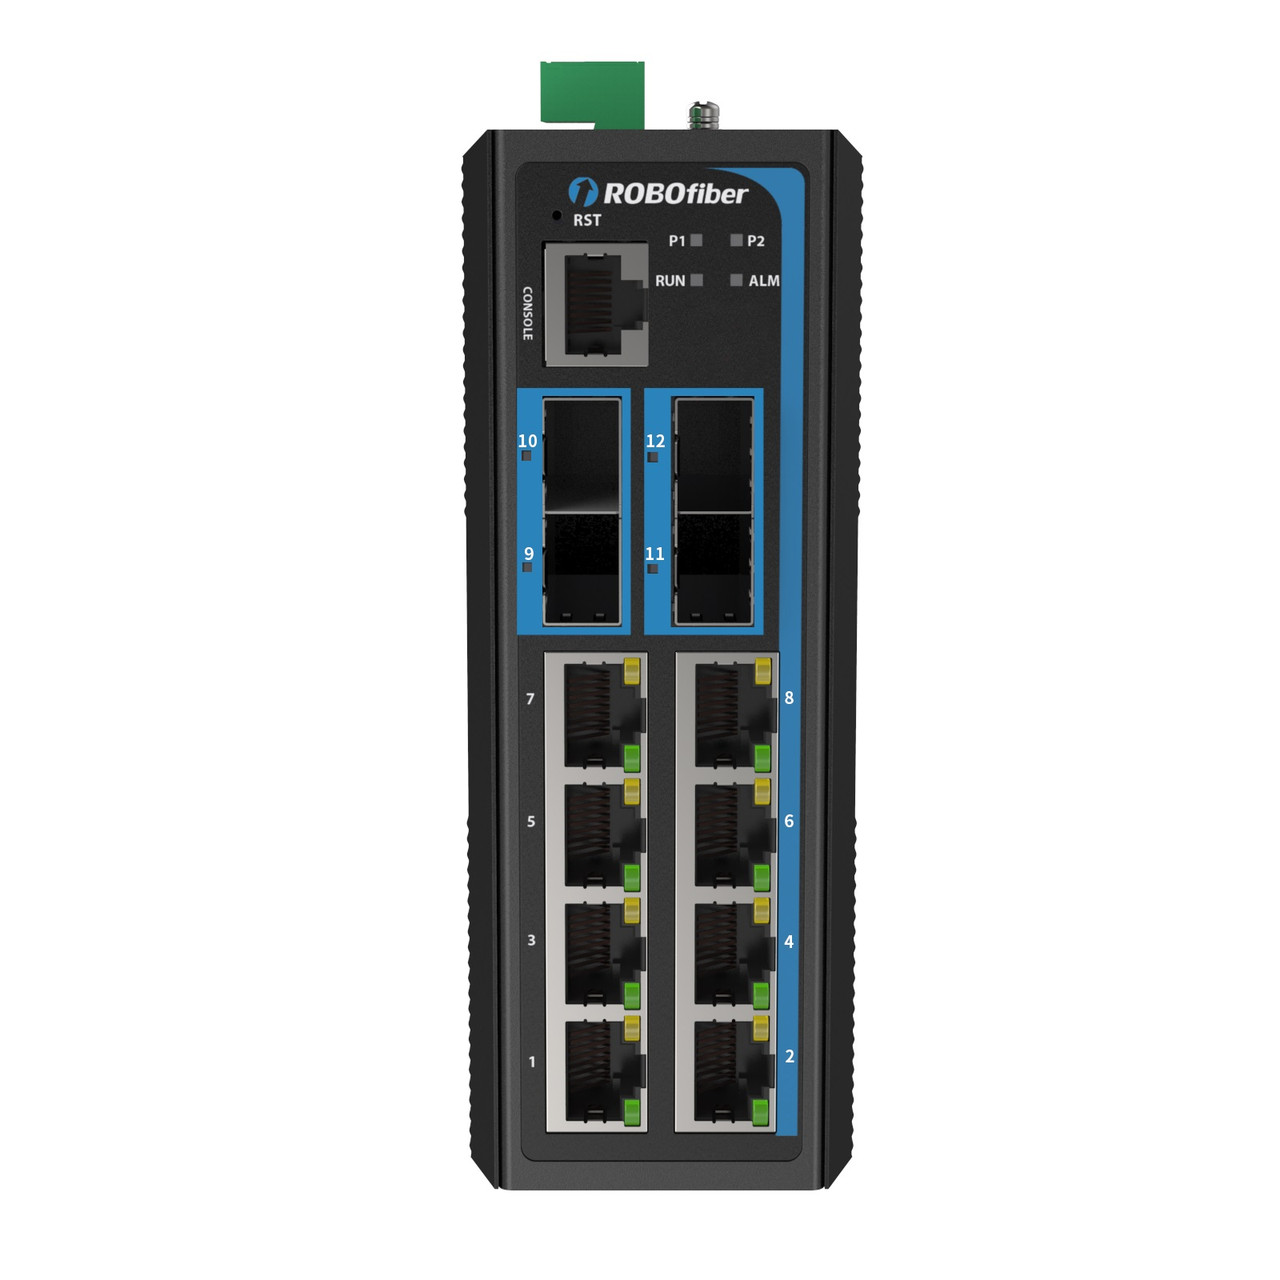 H10-804SM-PSE - Gigabit/10G 8+4 ports Ethernet Managed PoE Industrial fiber switch 240W total power - front panel